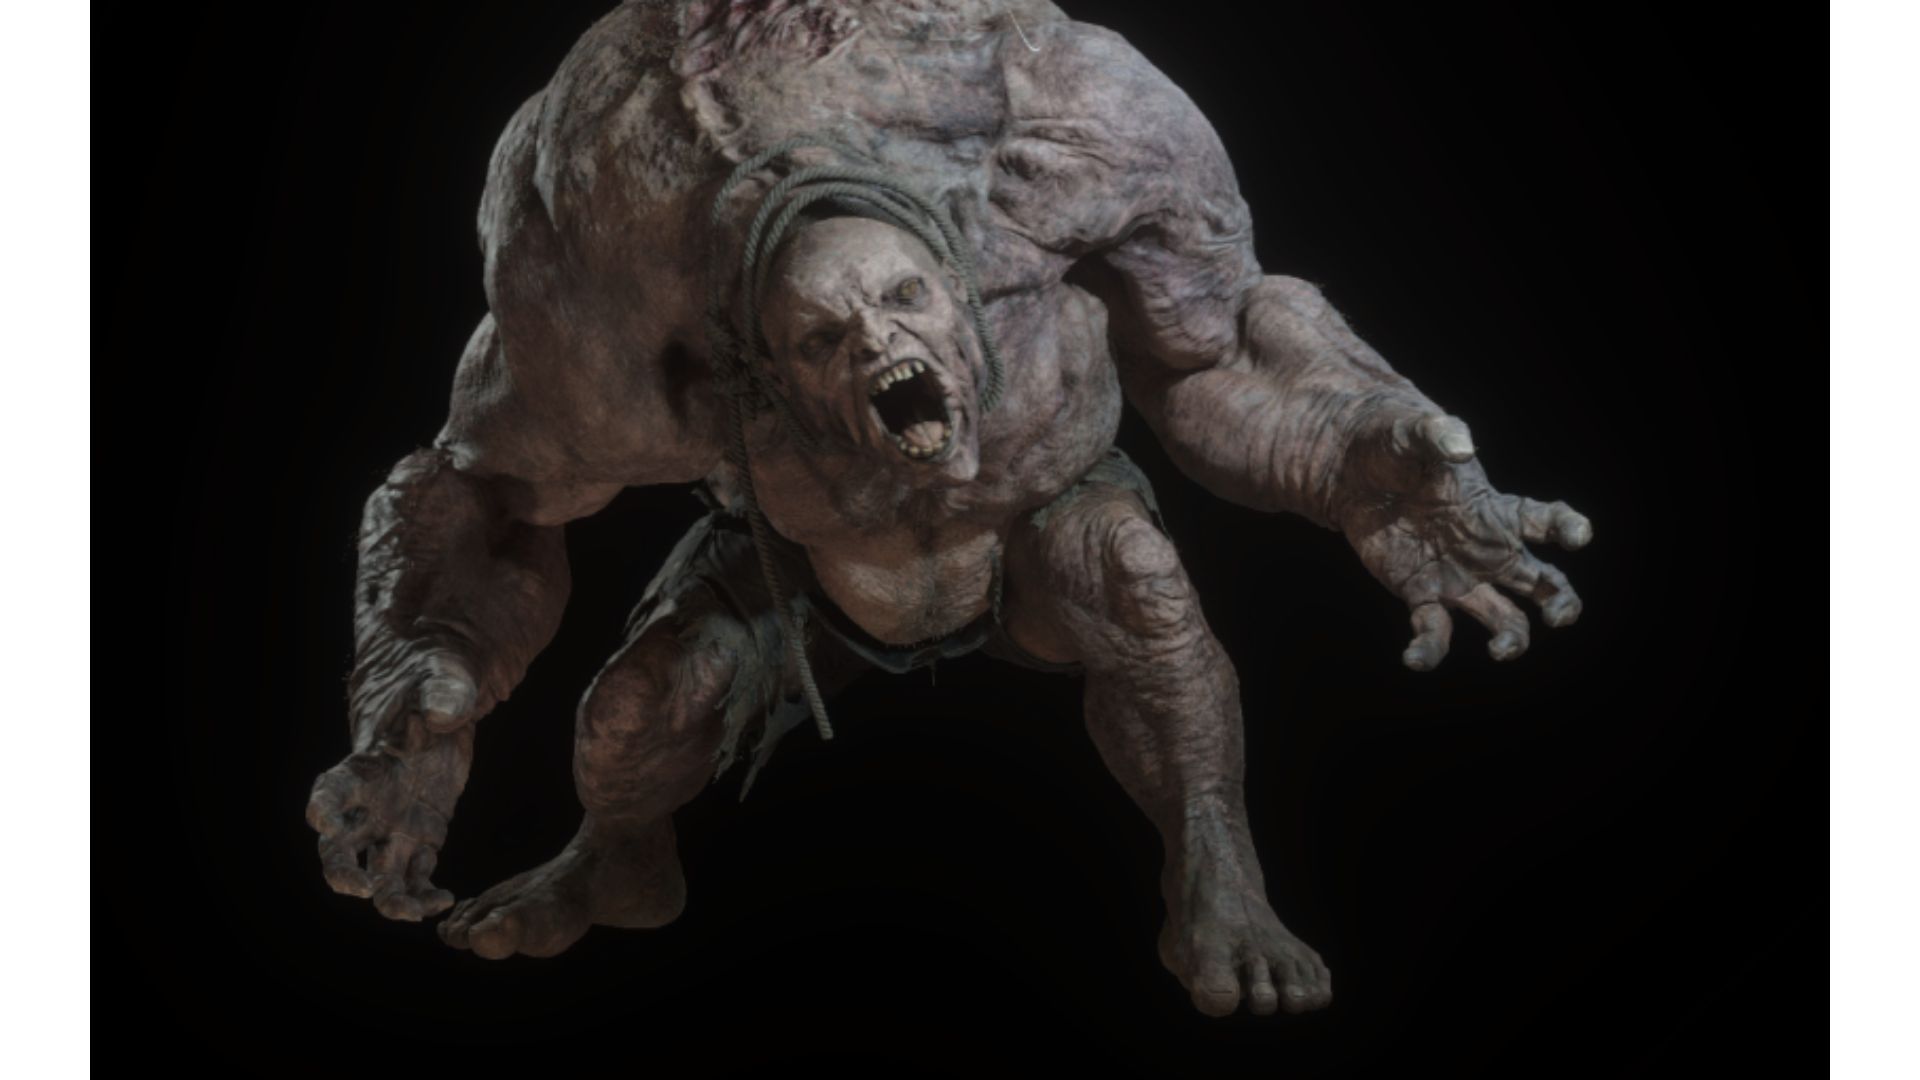 Resident Evil 4 Remake Bosses: El Gigante can be seen